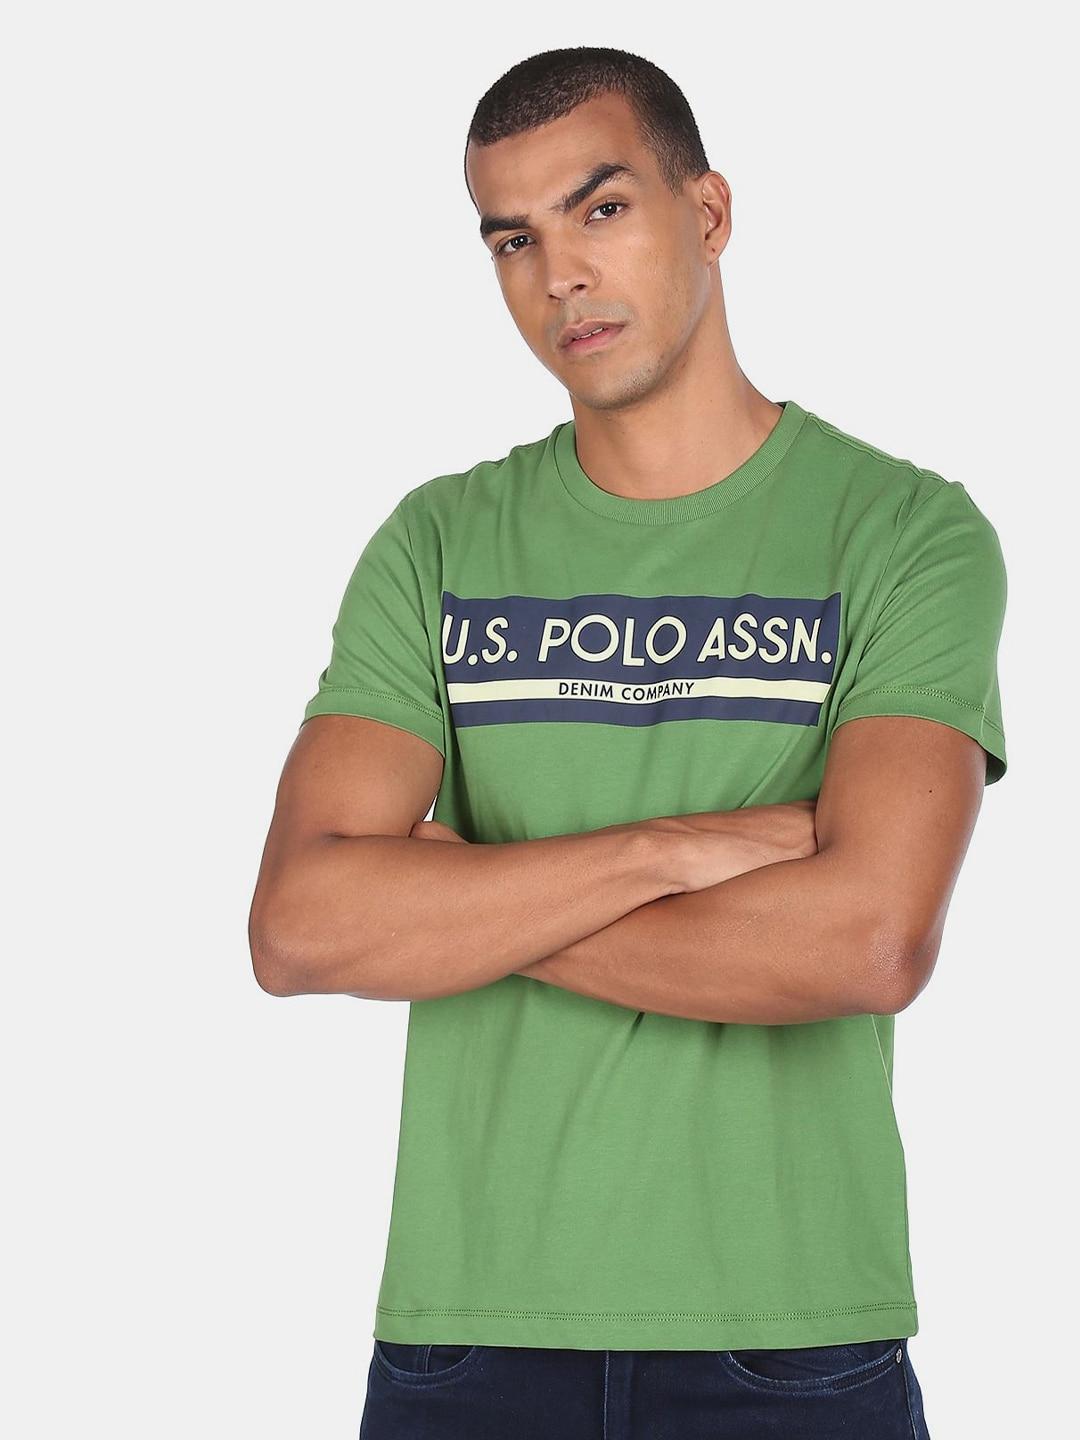 U.S. Polo Assn. Denim Co.Men Green Typography Printed Cotton T-shirt